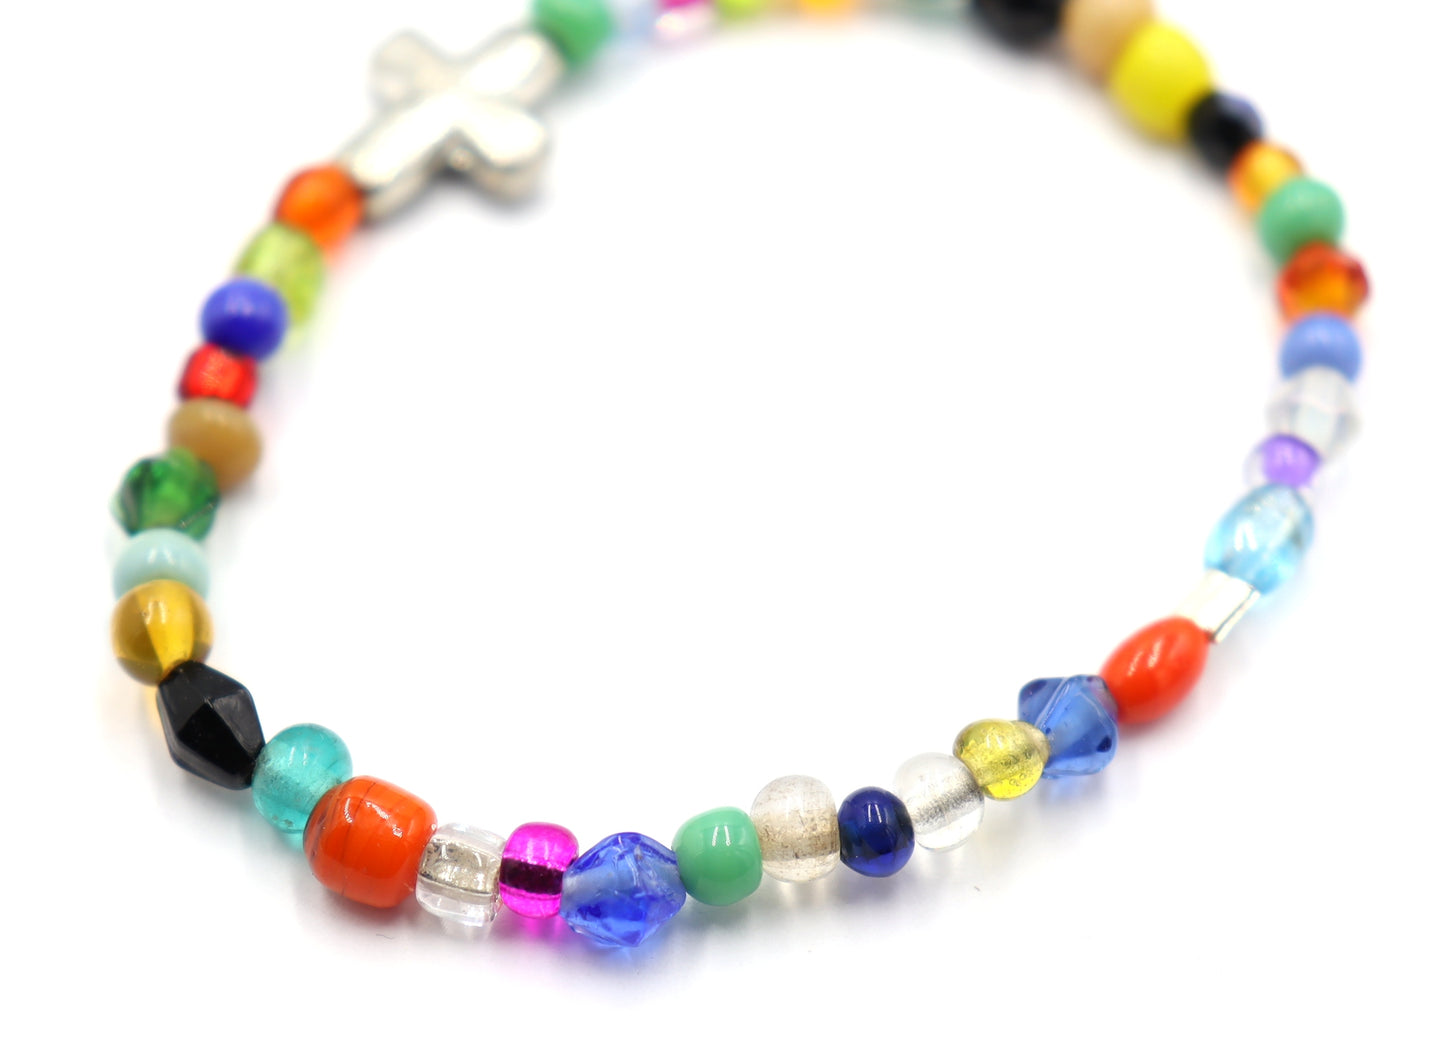 Colorful Joy Artisan Beads and Silver Metallic Cross Stretch Bracelet by Monkey's Mojo